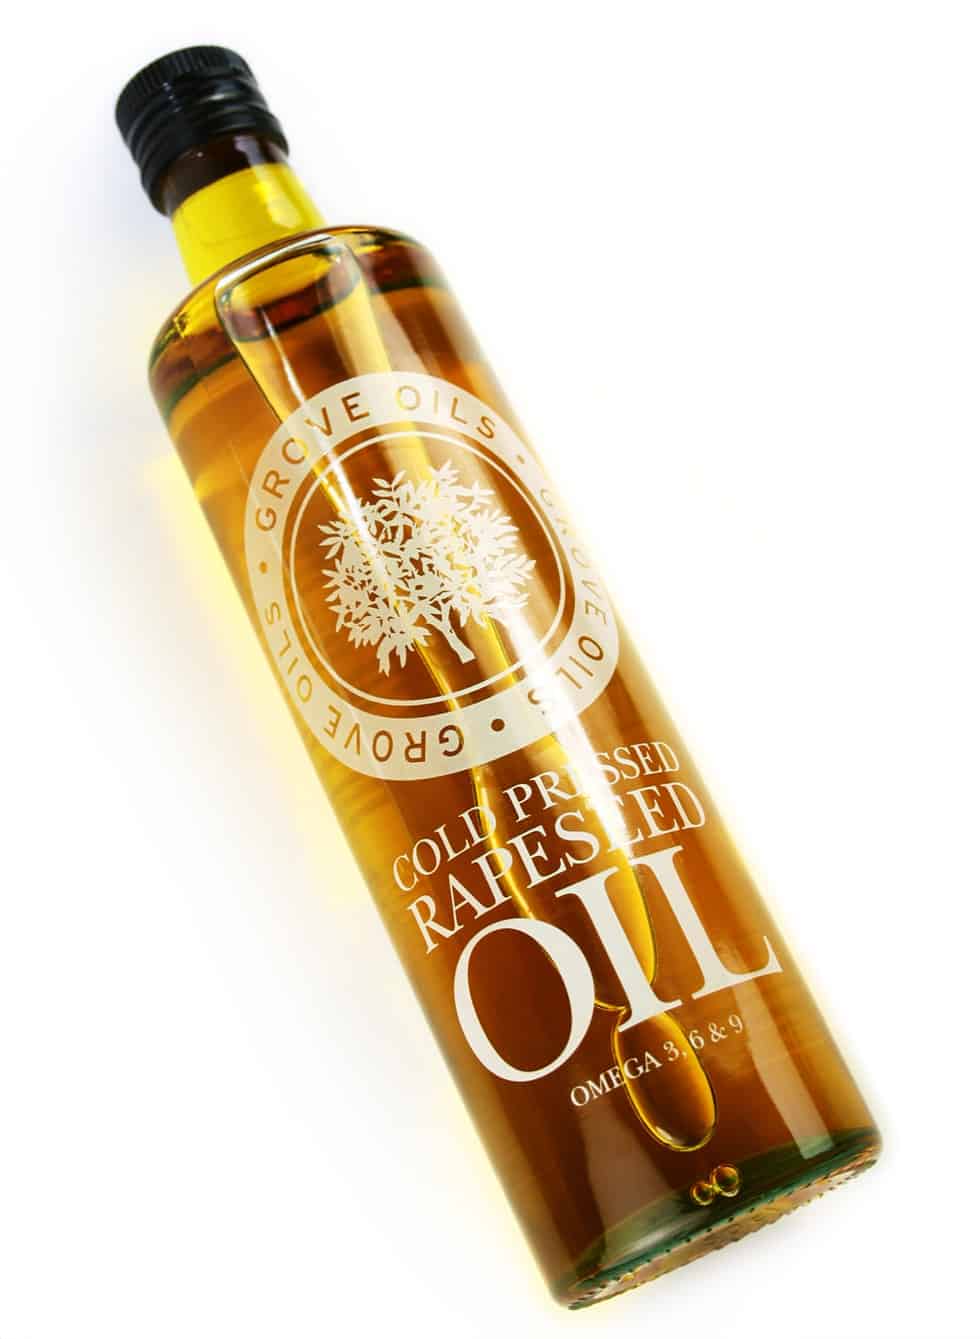 Grove Oils rapeseed oil bottle identity design and artwork by Paul Cartwright Branding.